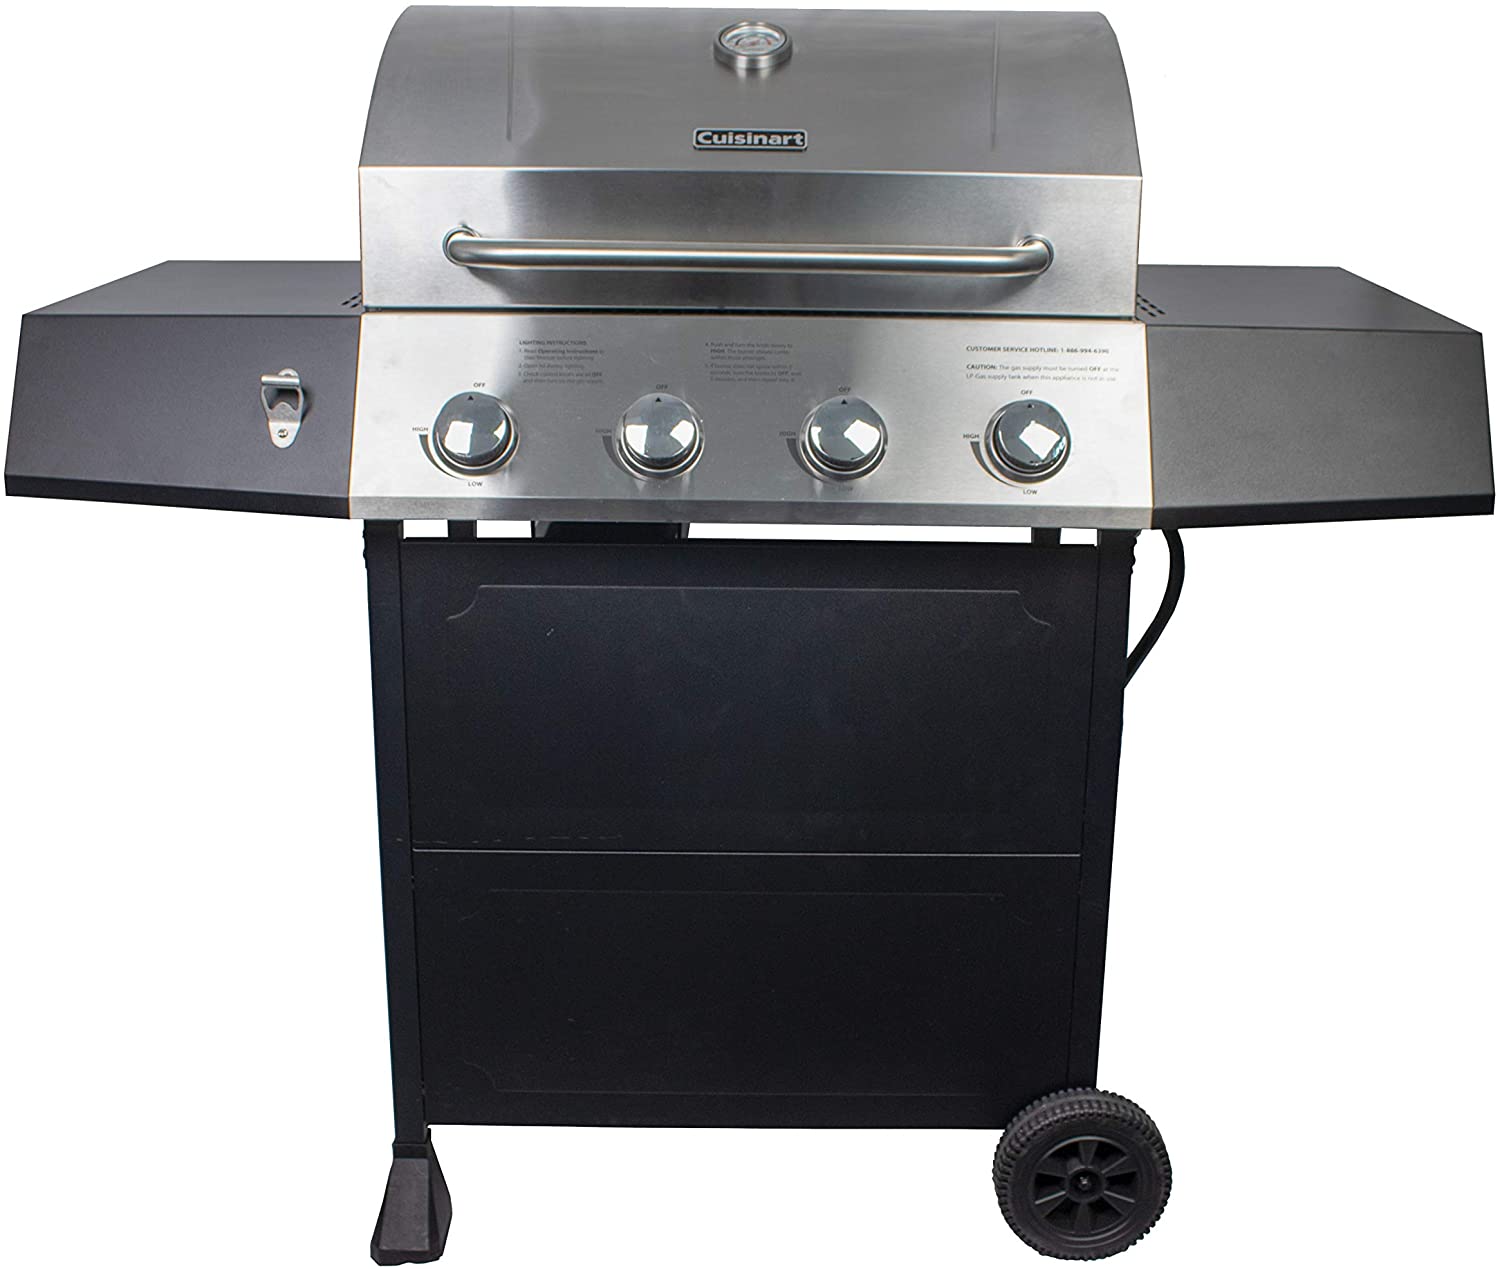 Cuisinart CGG-7400 Full-Size Four-Burner Gas BBQ Grill